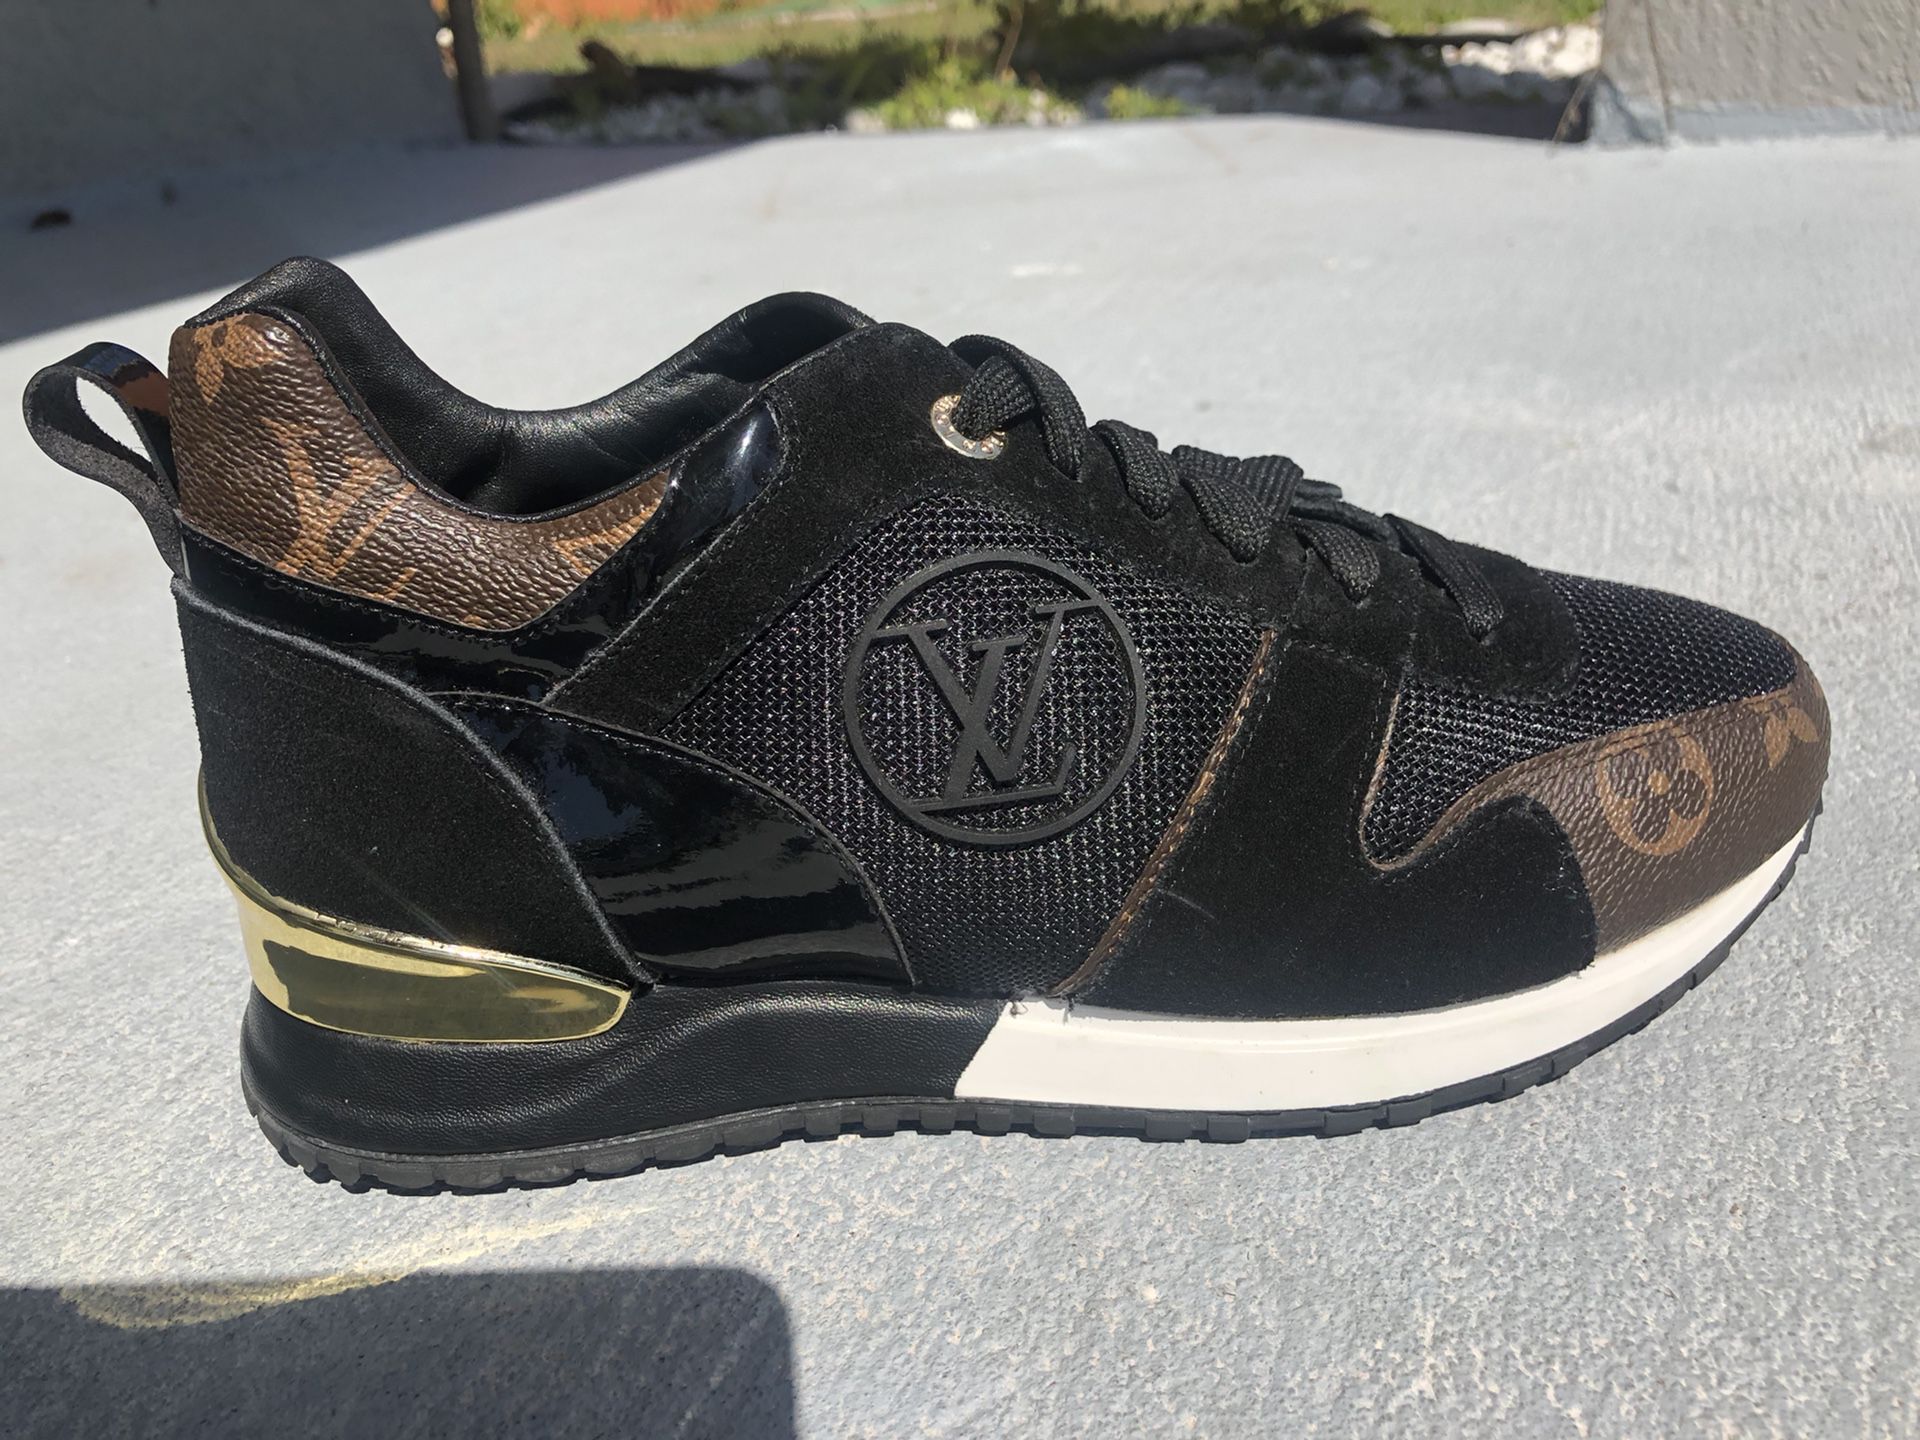 Louis Vuitton Run Away Sneaker for Sale in Orlando, FL - OfferUp